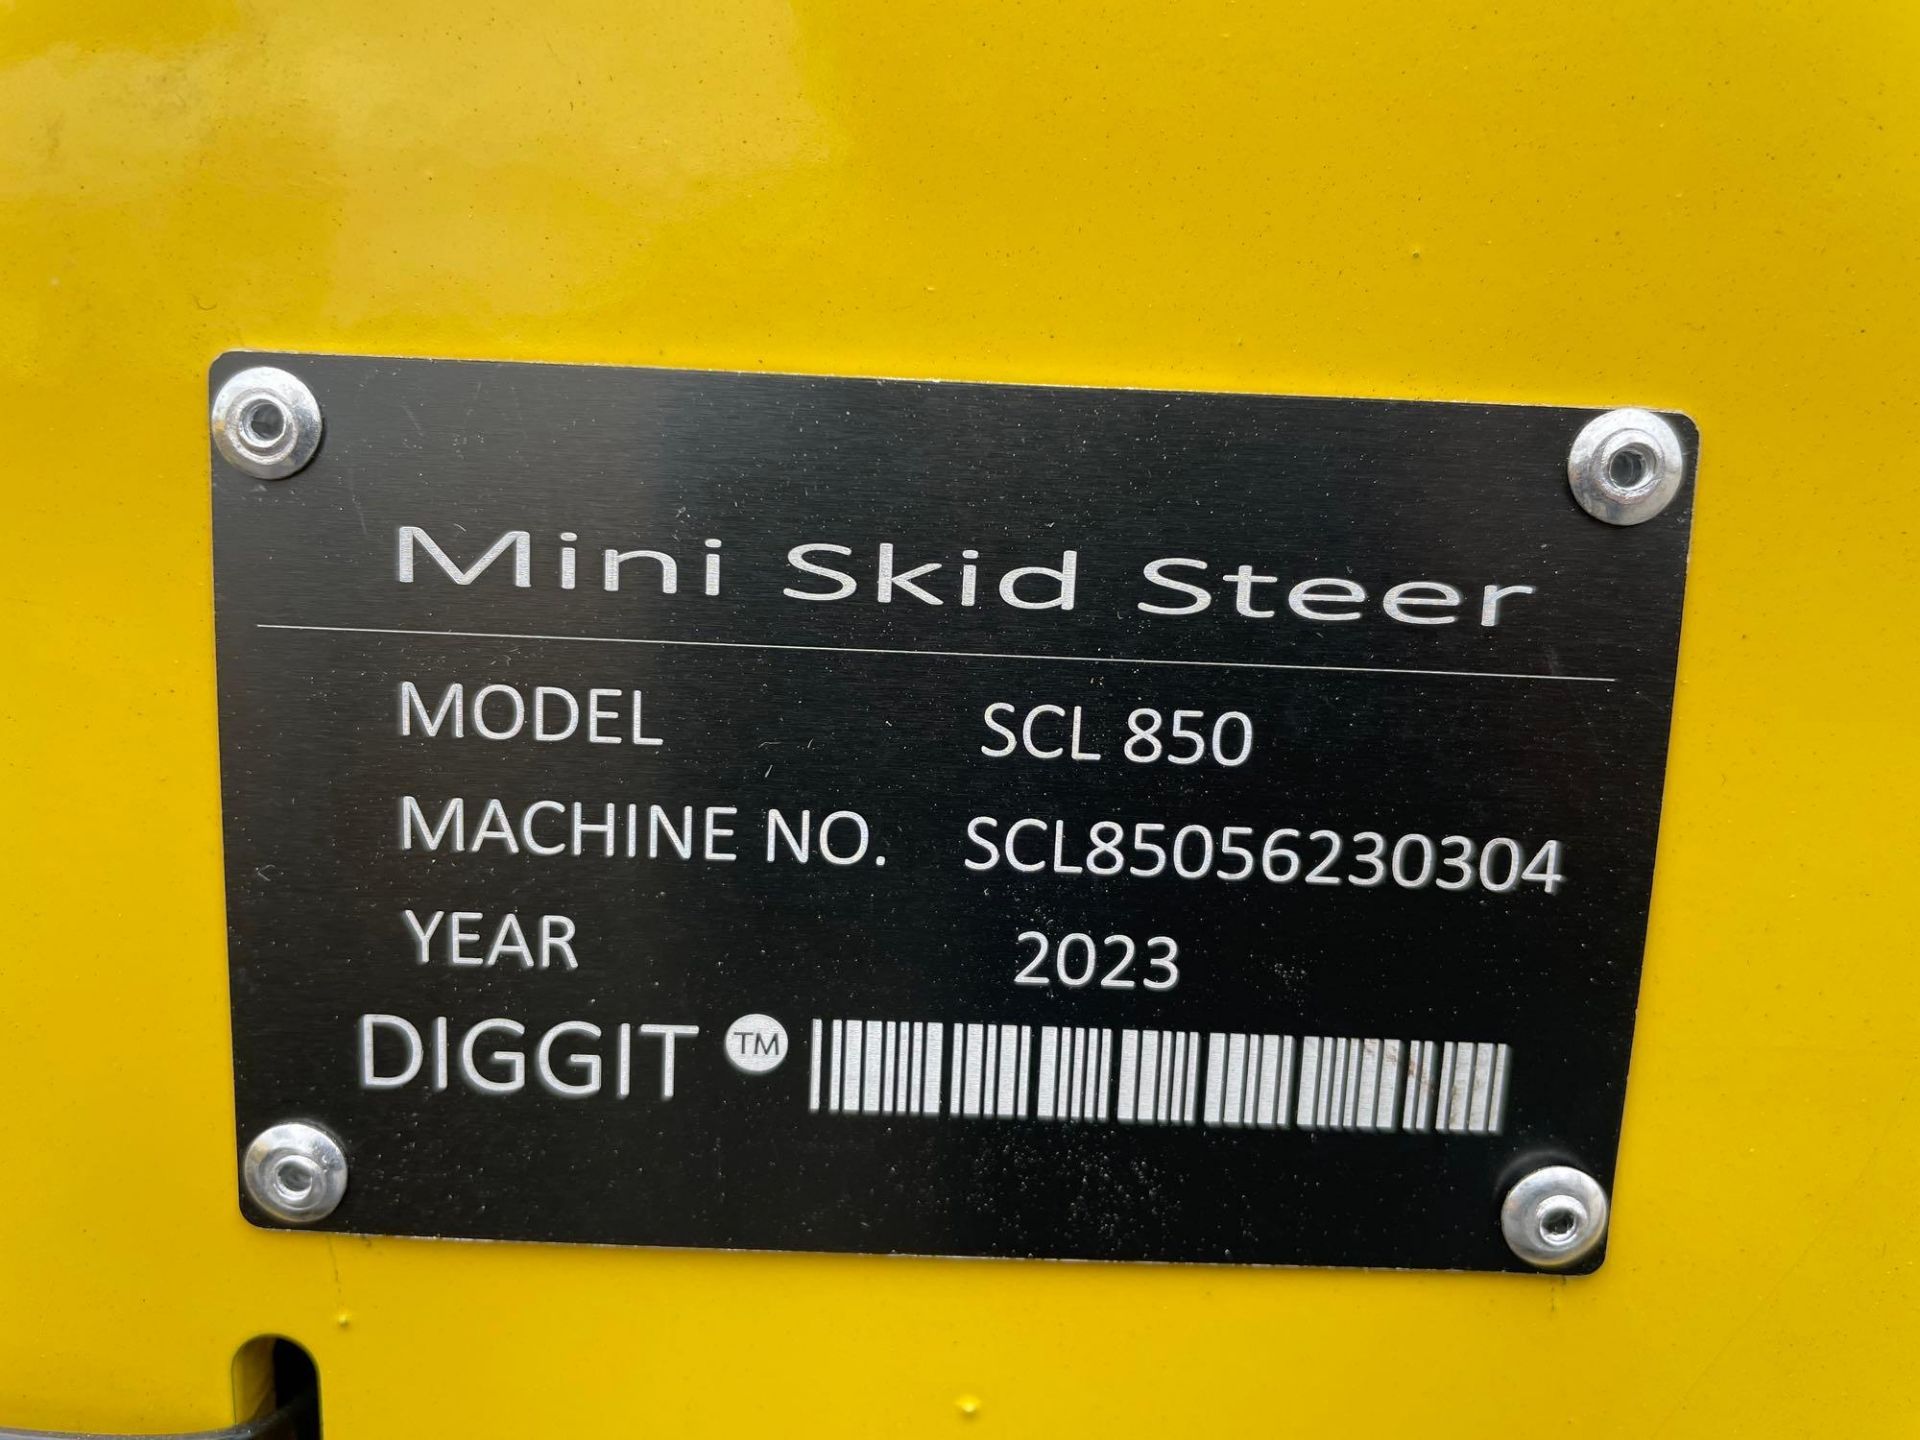 Diggit SCL850 Mini Skid Steer Loader - Image 5 of 11